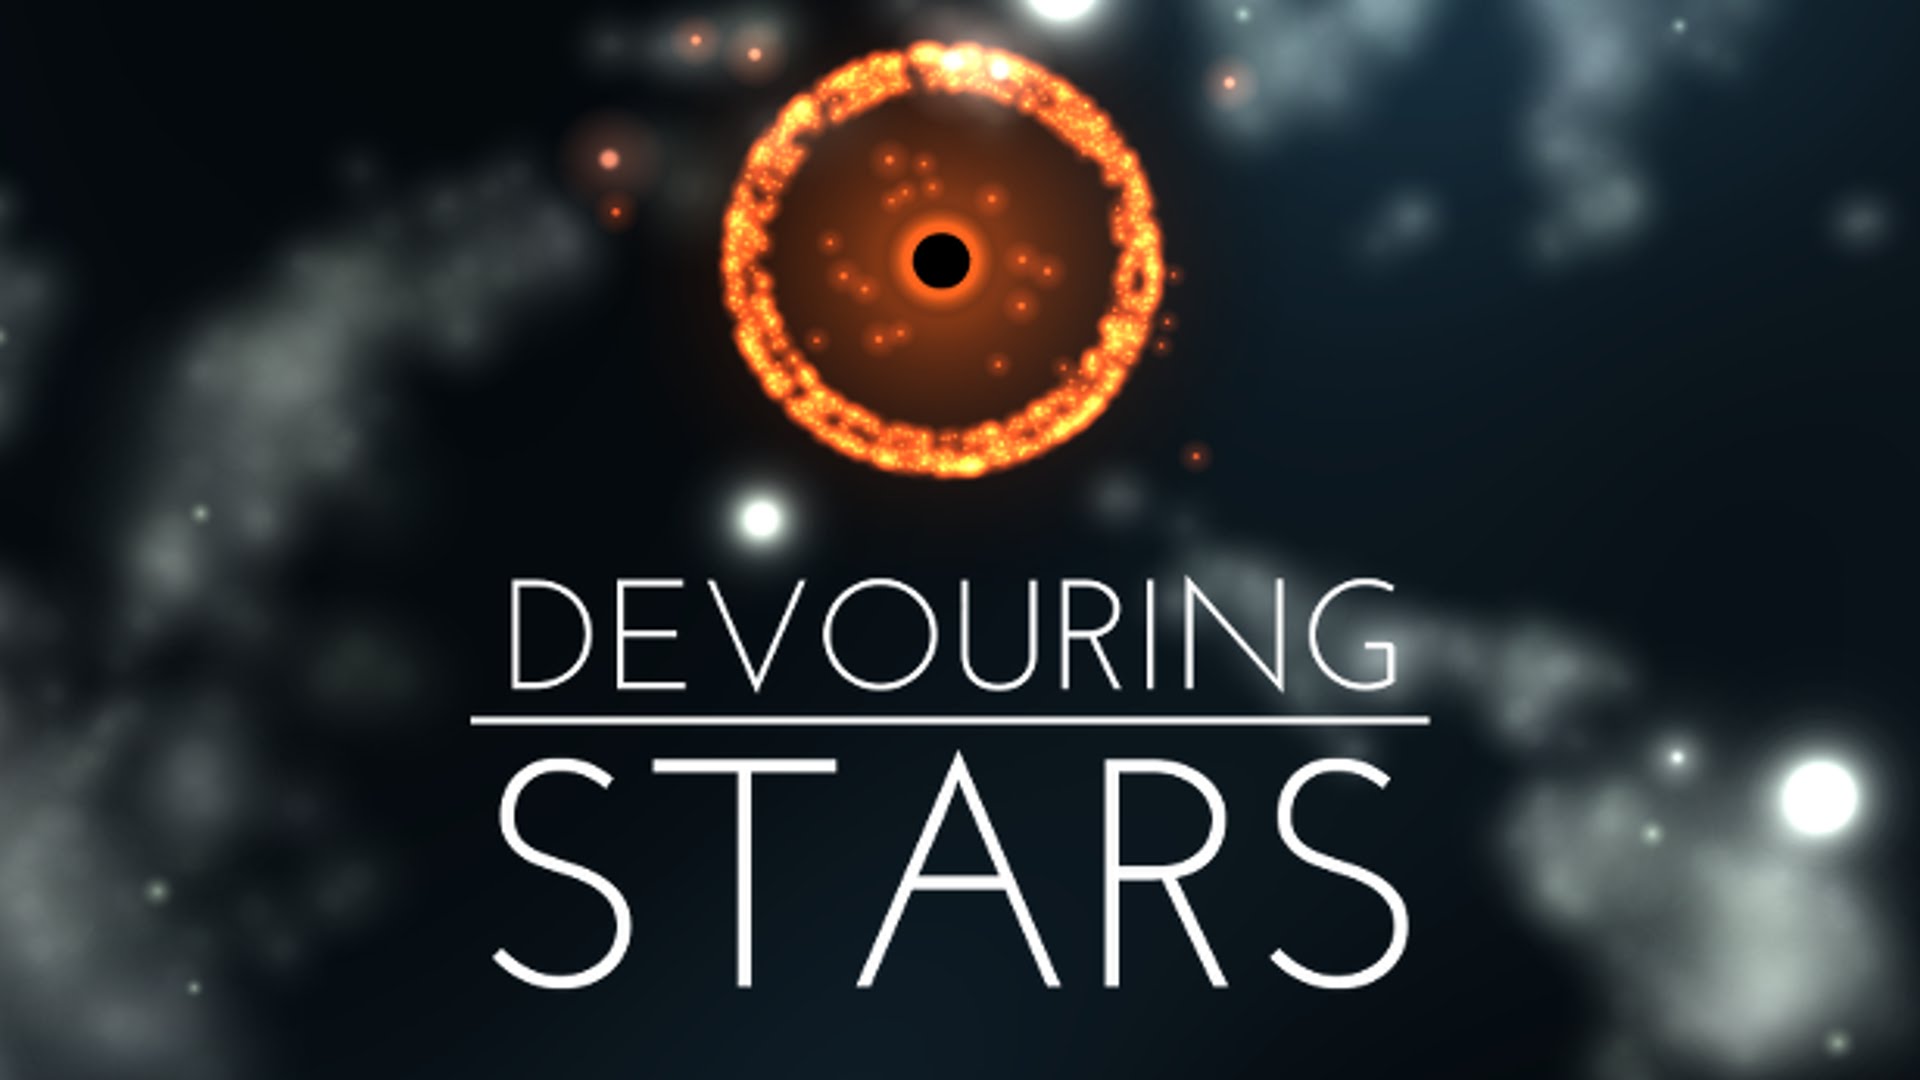 Devouring Stars HD wallpapers, Desktop wallpaper - most viewed